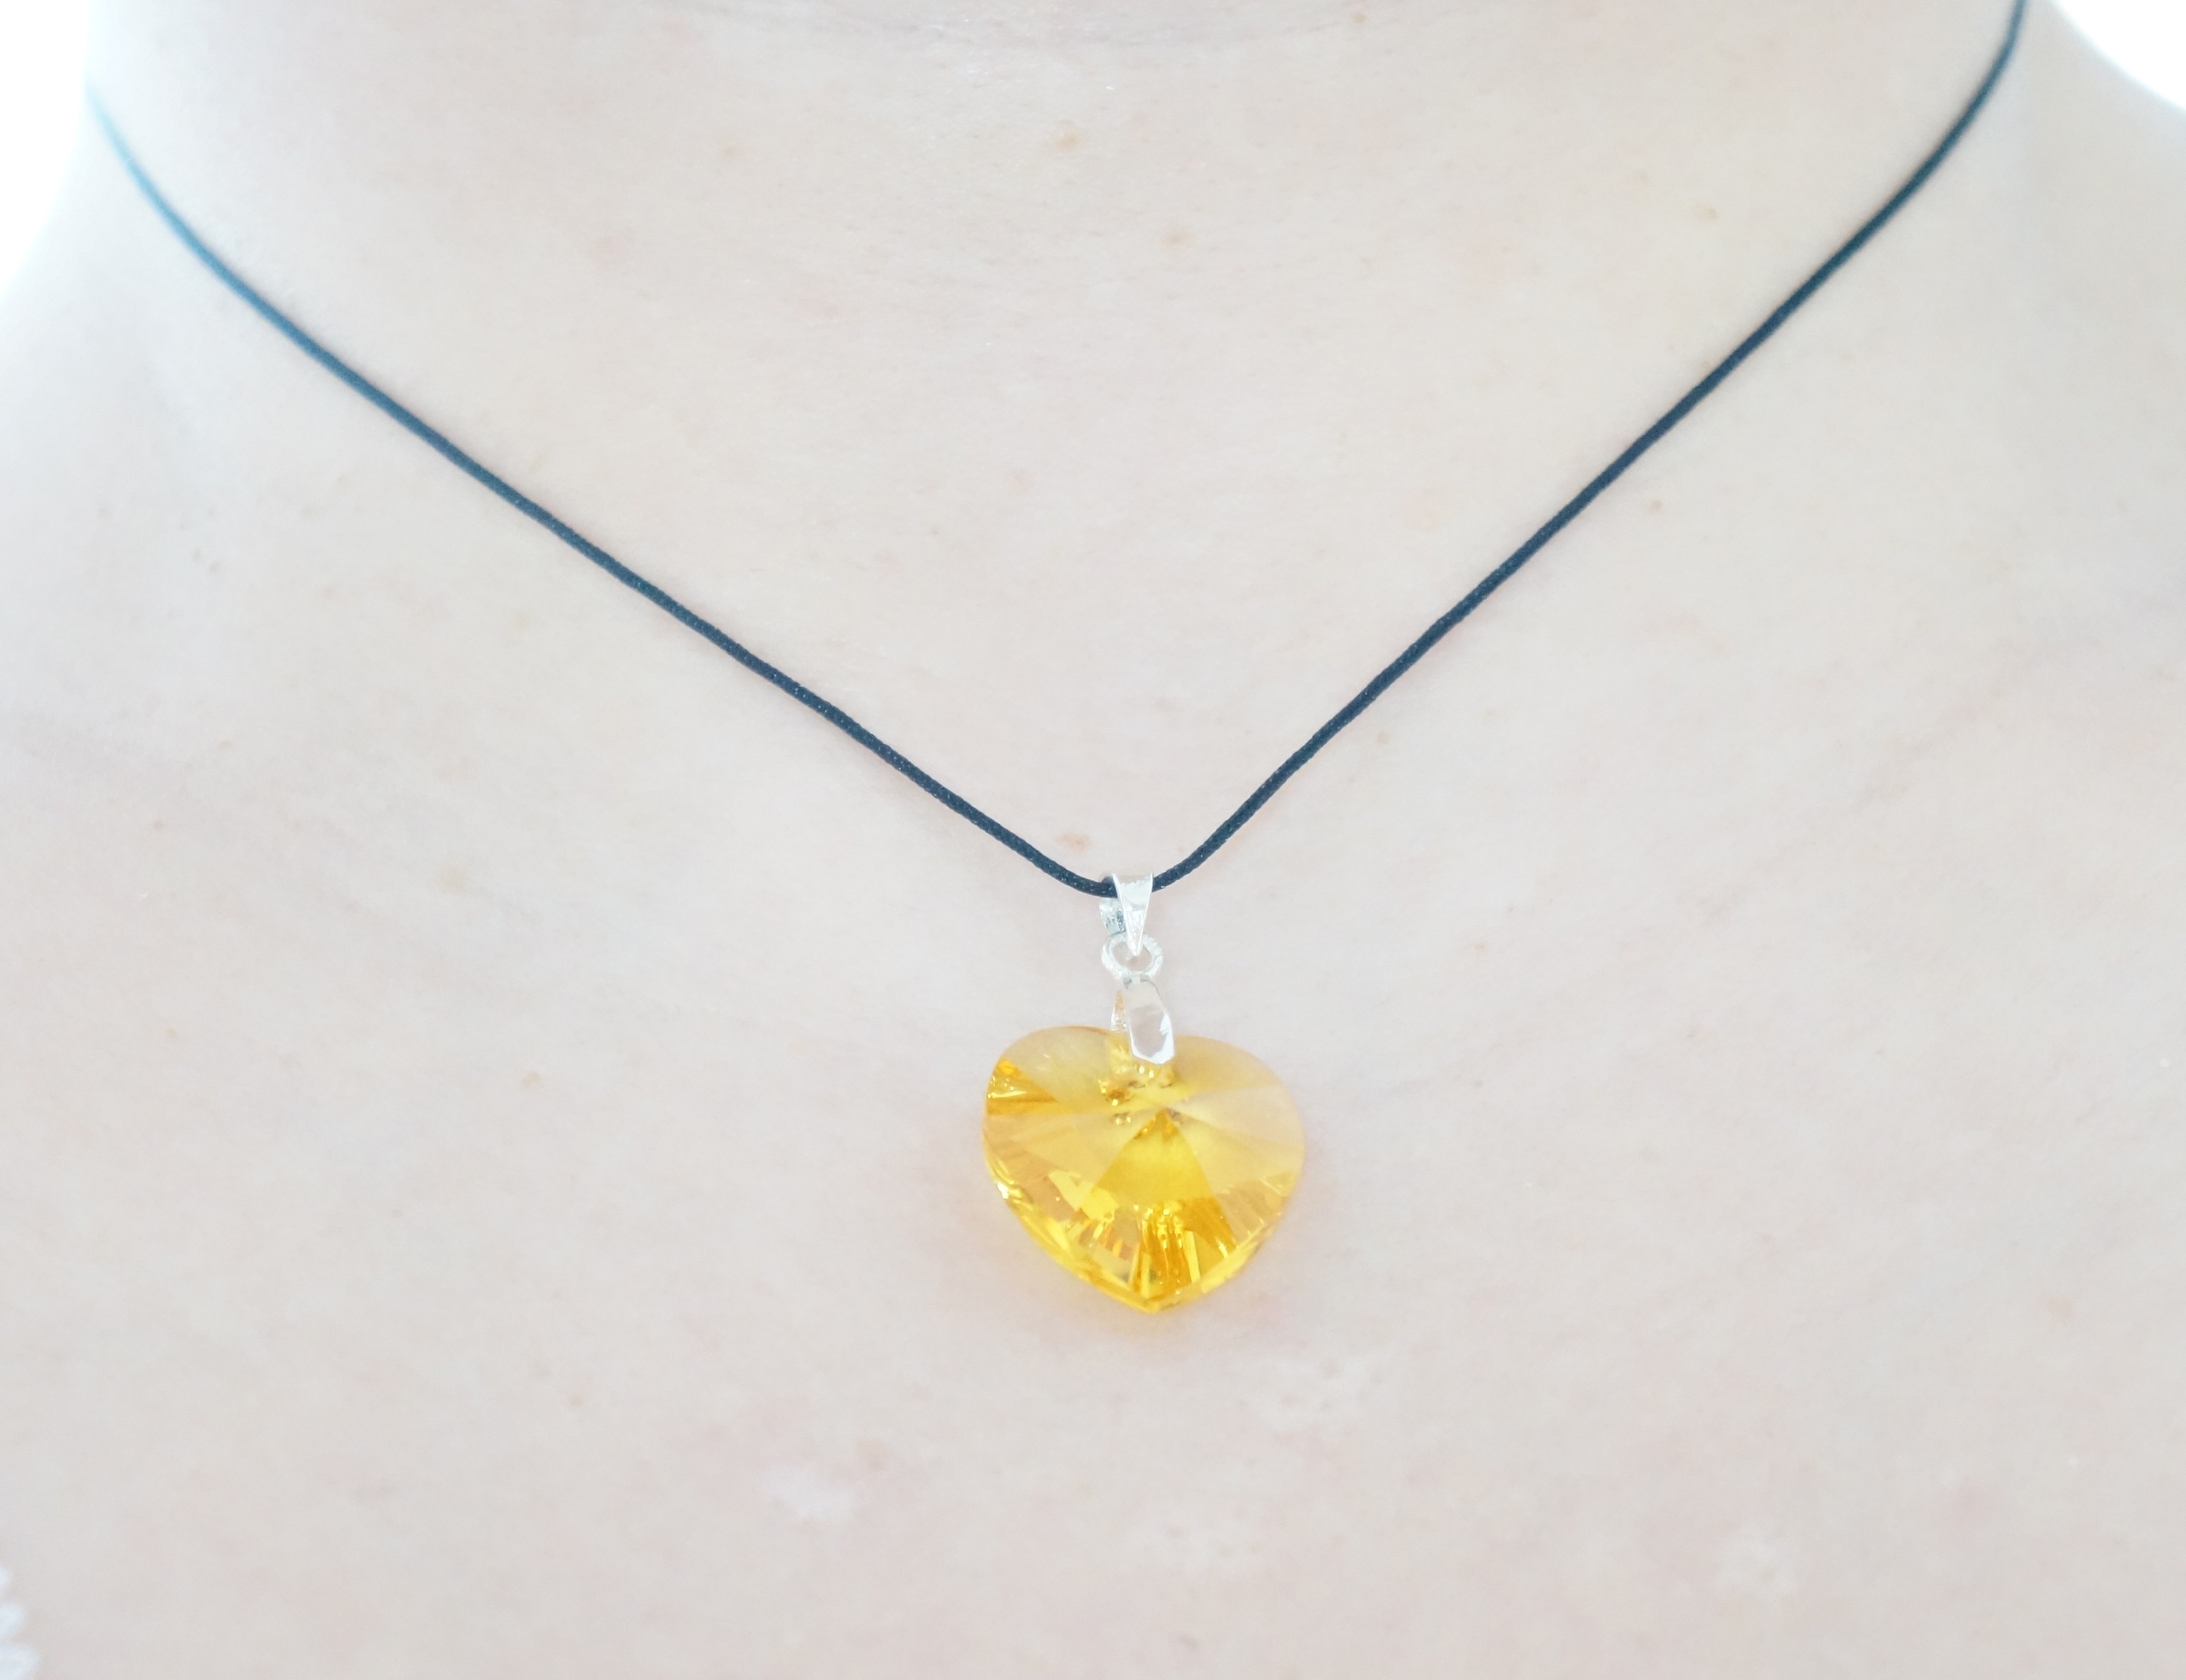 Pendentif coeur jaune en cristal de Swarovski - Les Bijoux du NIbou